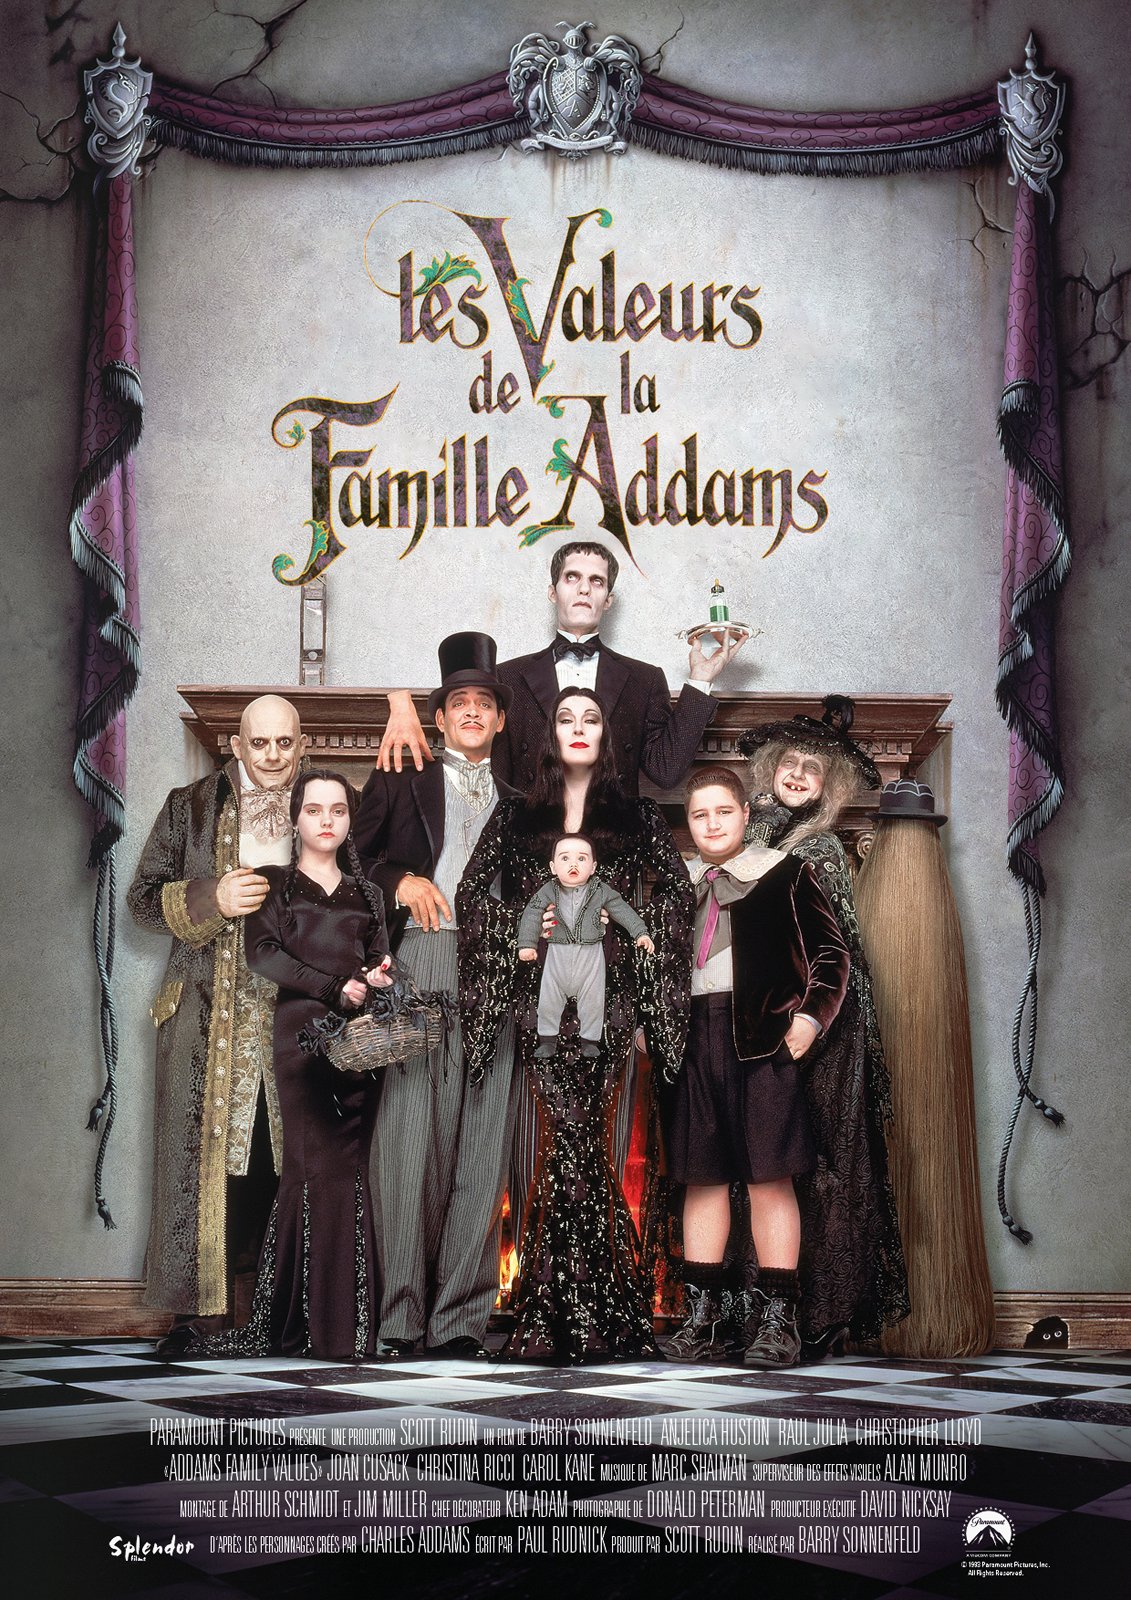 Les Valeurs de la famille Addams en DVD : La Famille Addams - L'intégrale  des films : La Famille Addams + Les valeurs de la Famille Addam -  AlloCiné